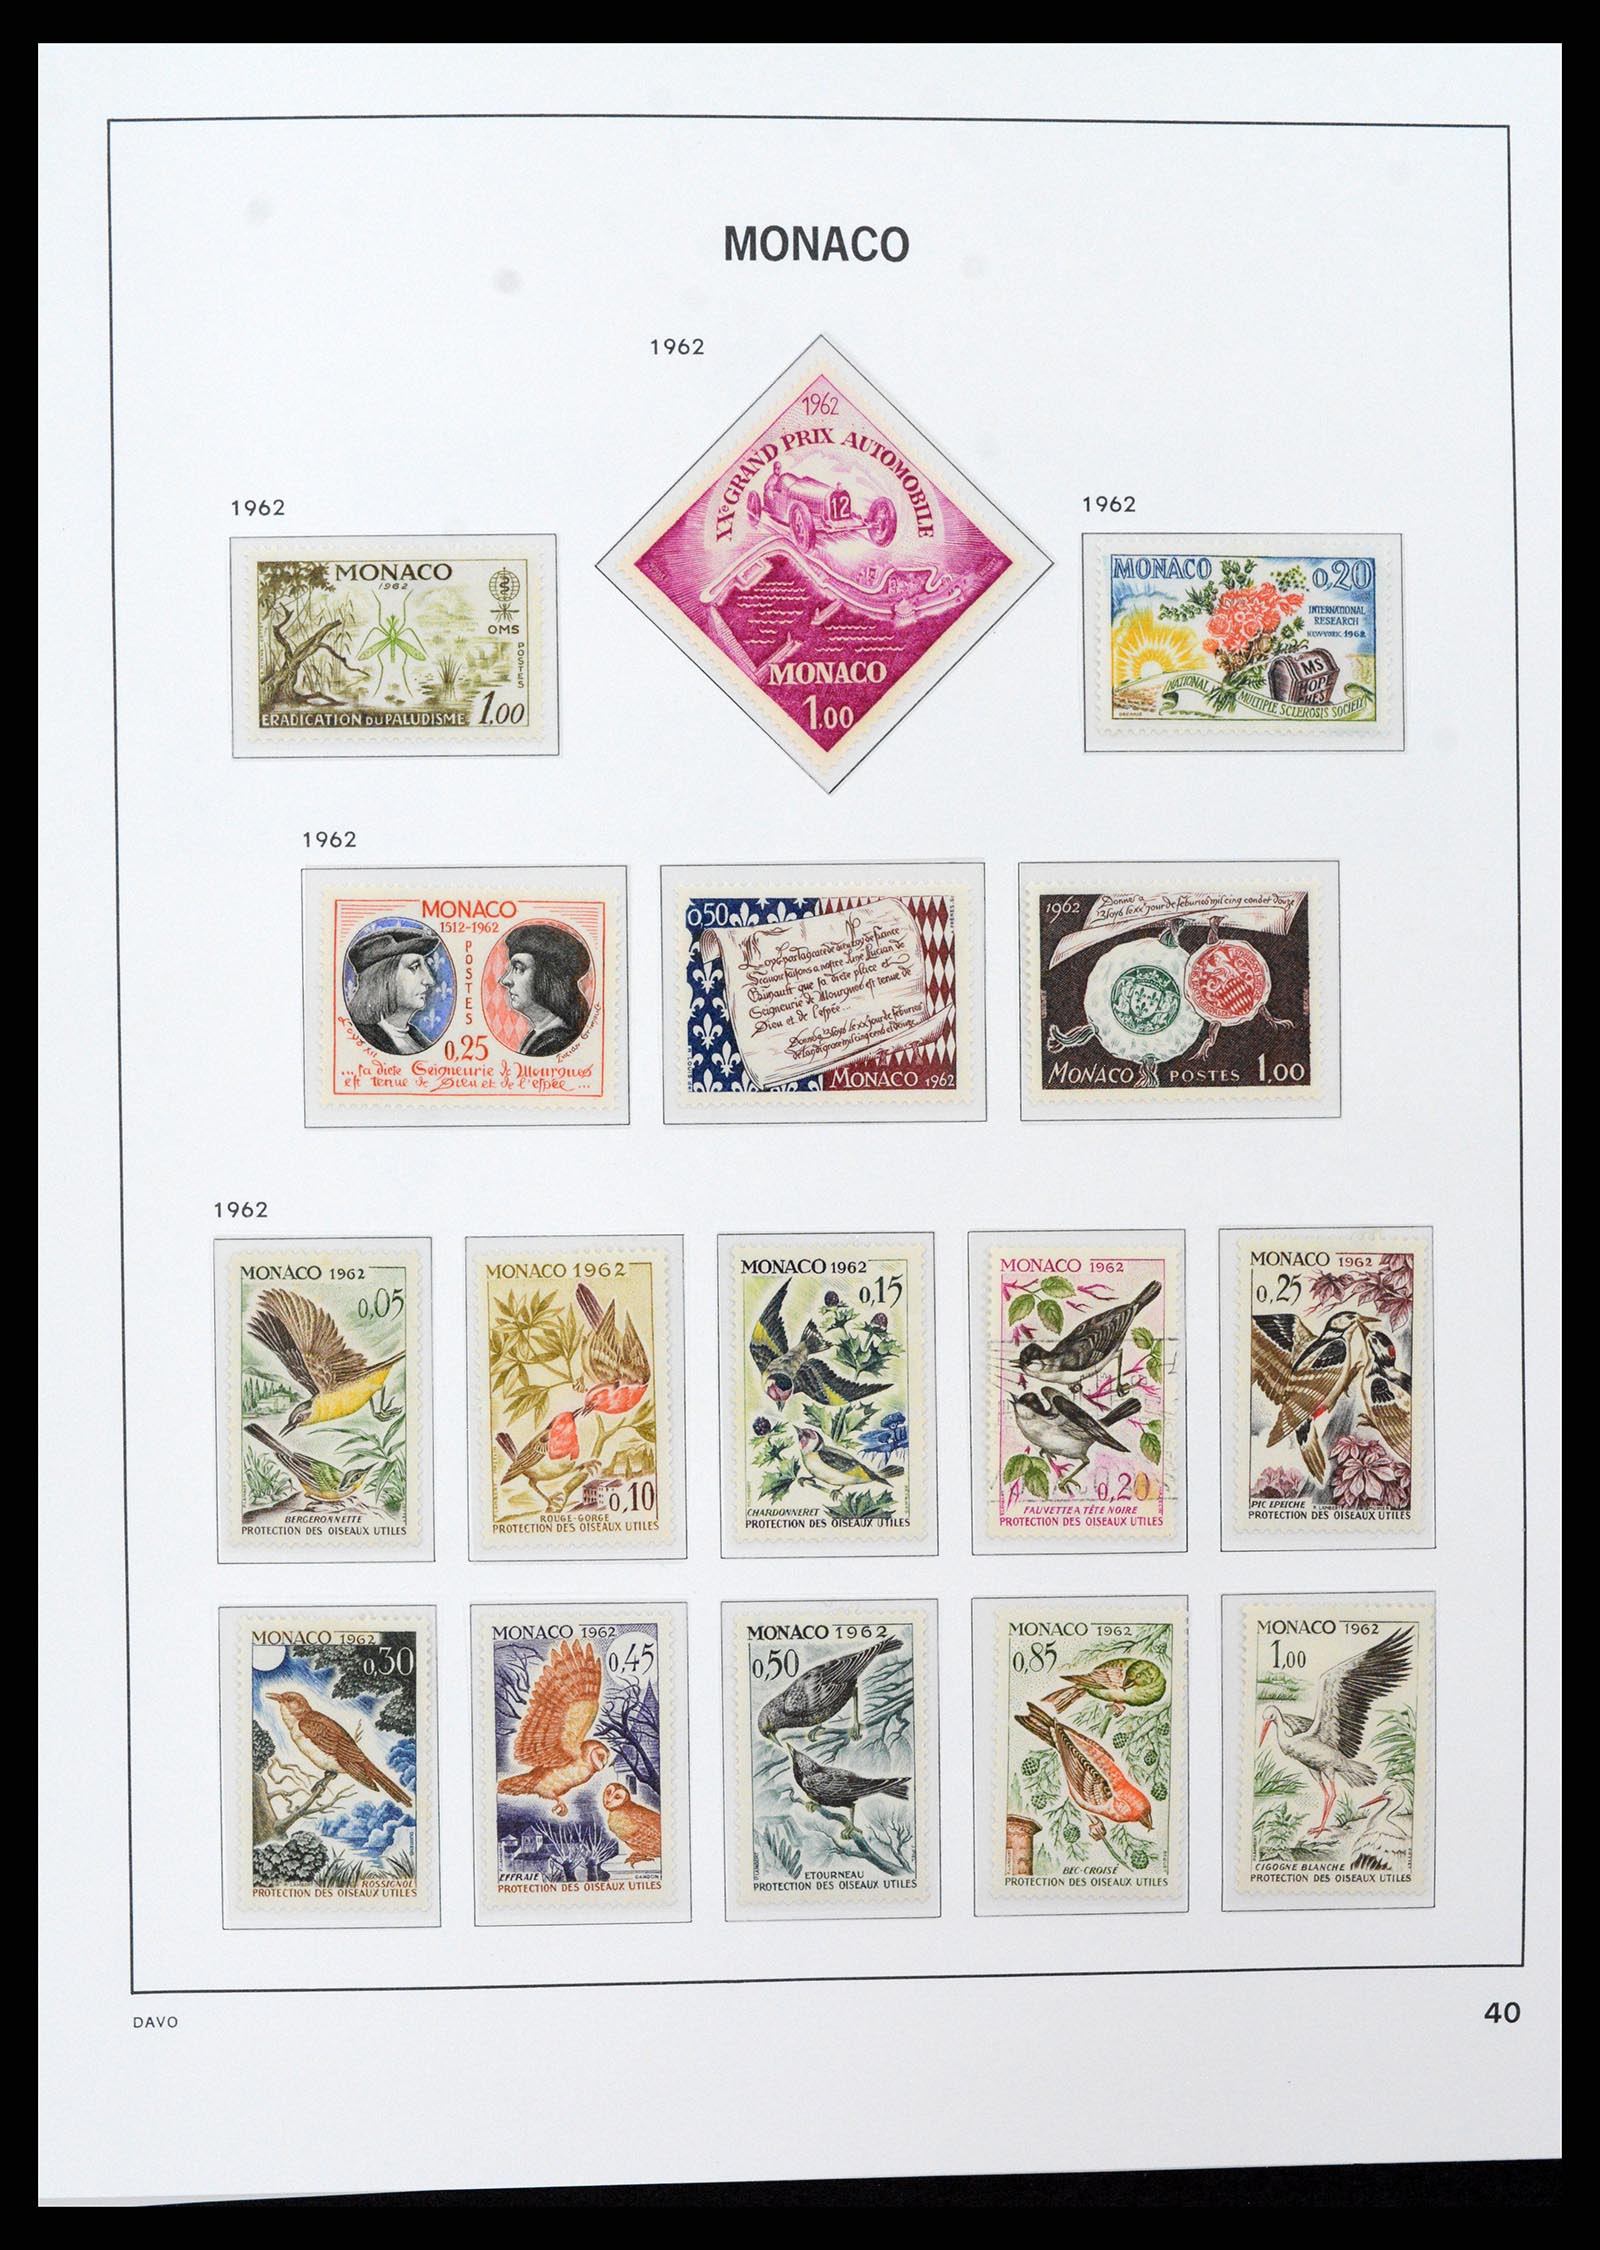 37279 040 - Stamp collection 37279 Monaco 1885-1969.